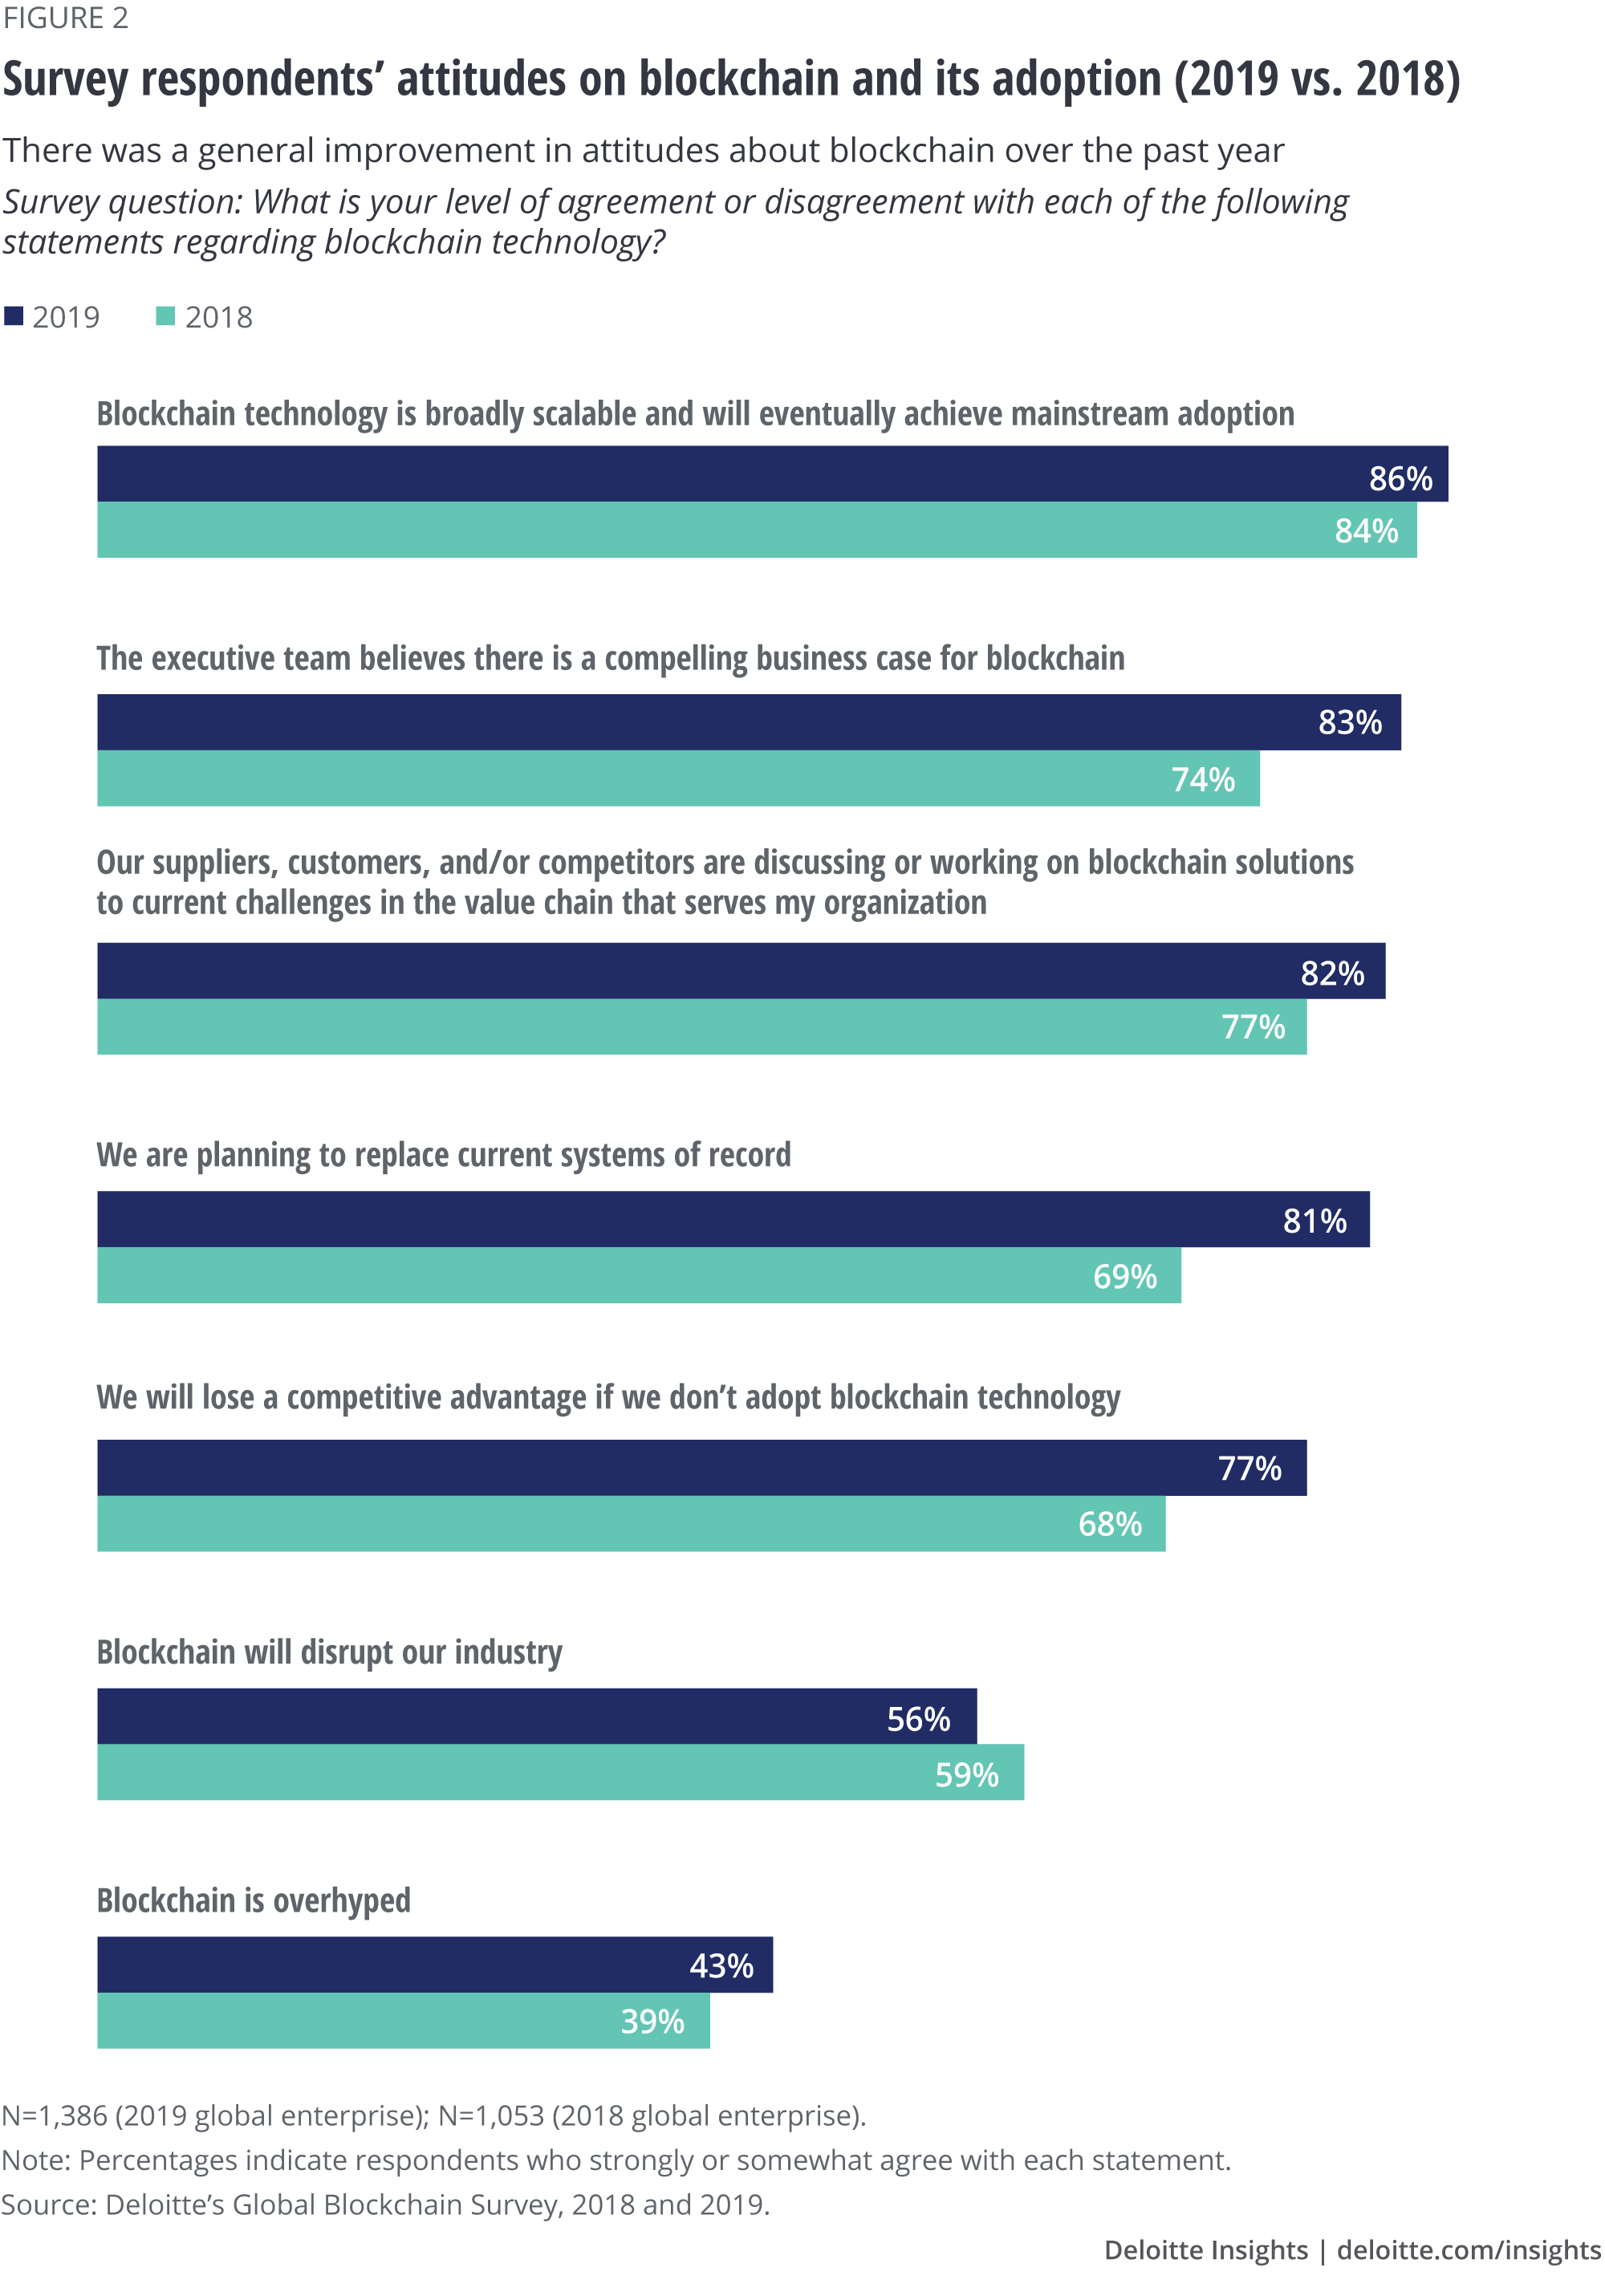 Survey respondents' attitudes on blockchain and its adoption (2019 vs. 2018)